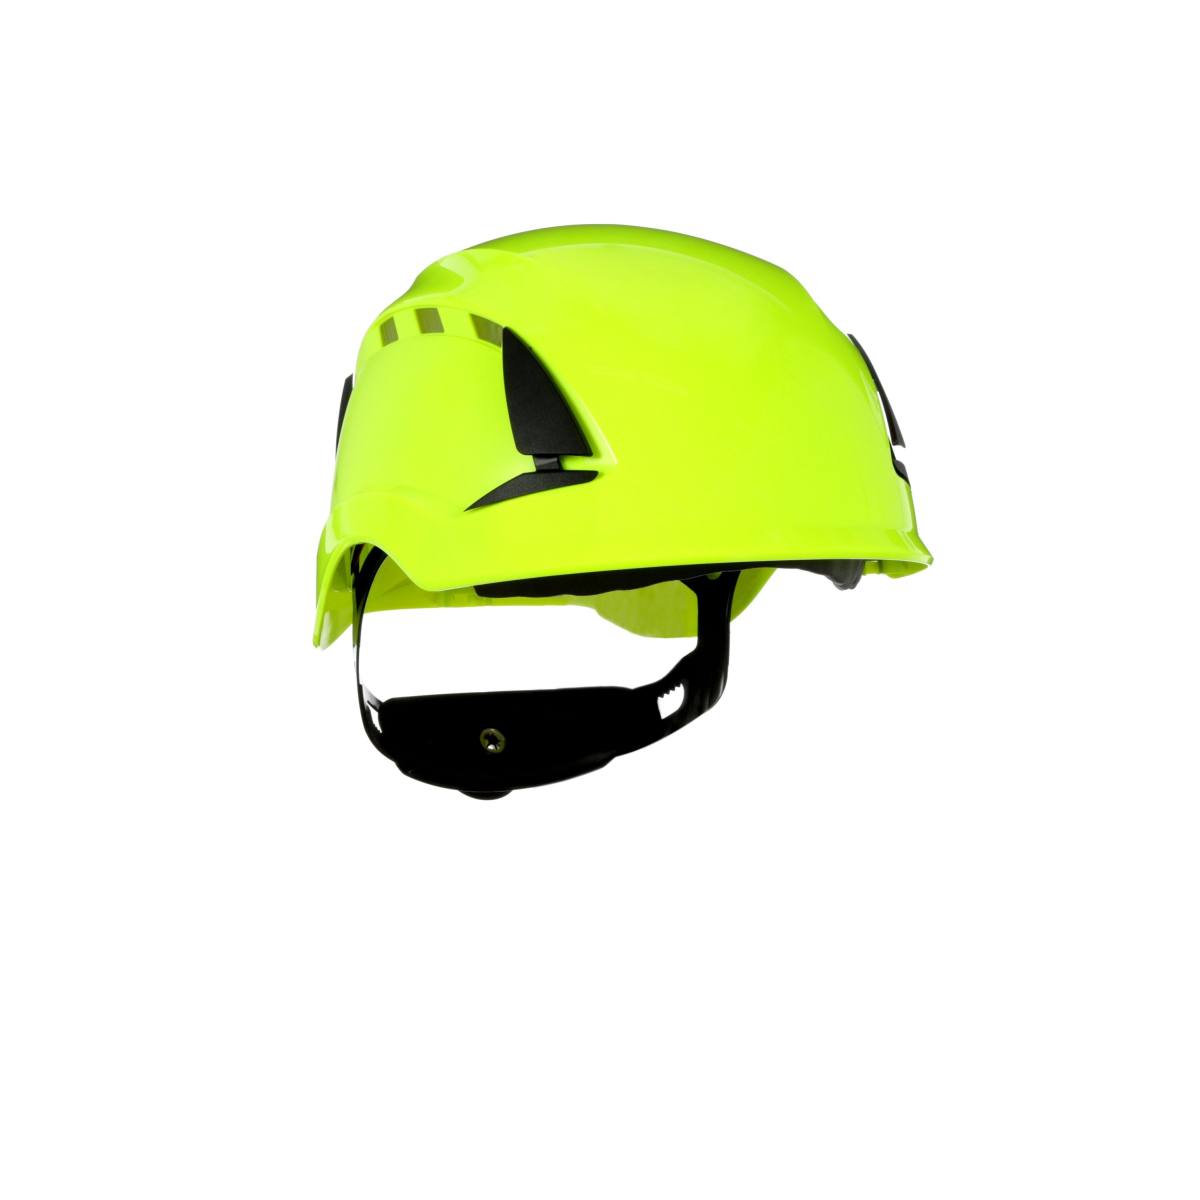 3M SecureFit safety helmet, X5514V-CE, neon green, ventilated, CE